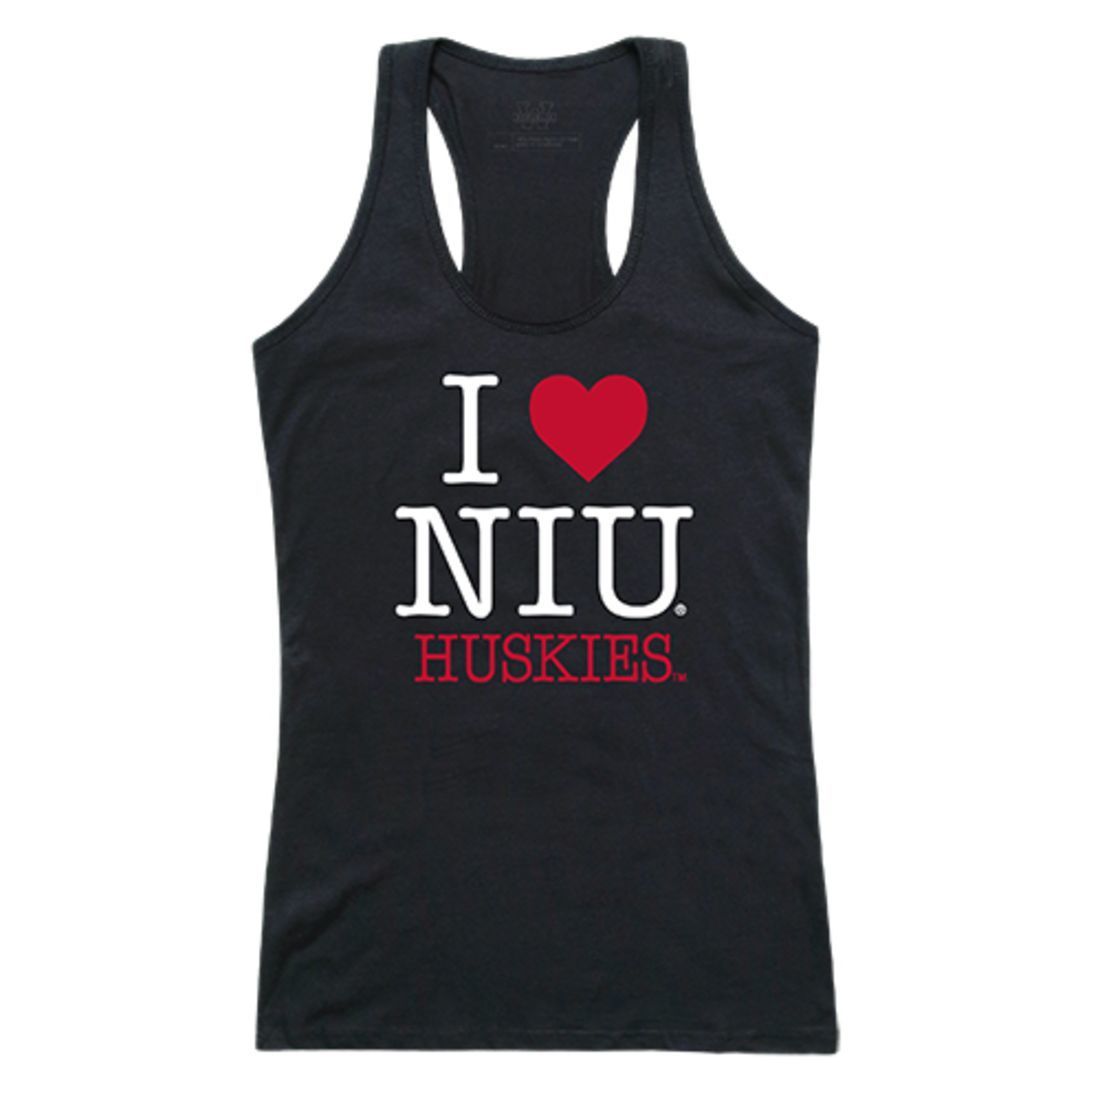 NIU Northern Illinois University Huskies Womens Love Tank Top Tee T-Shirt Black-Campus-Wardrobe